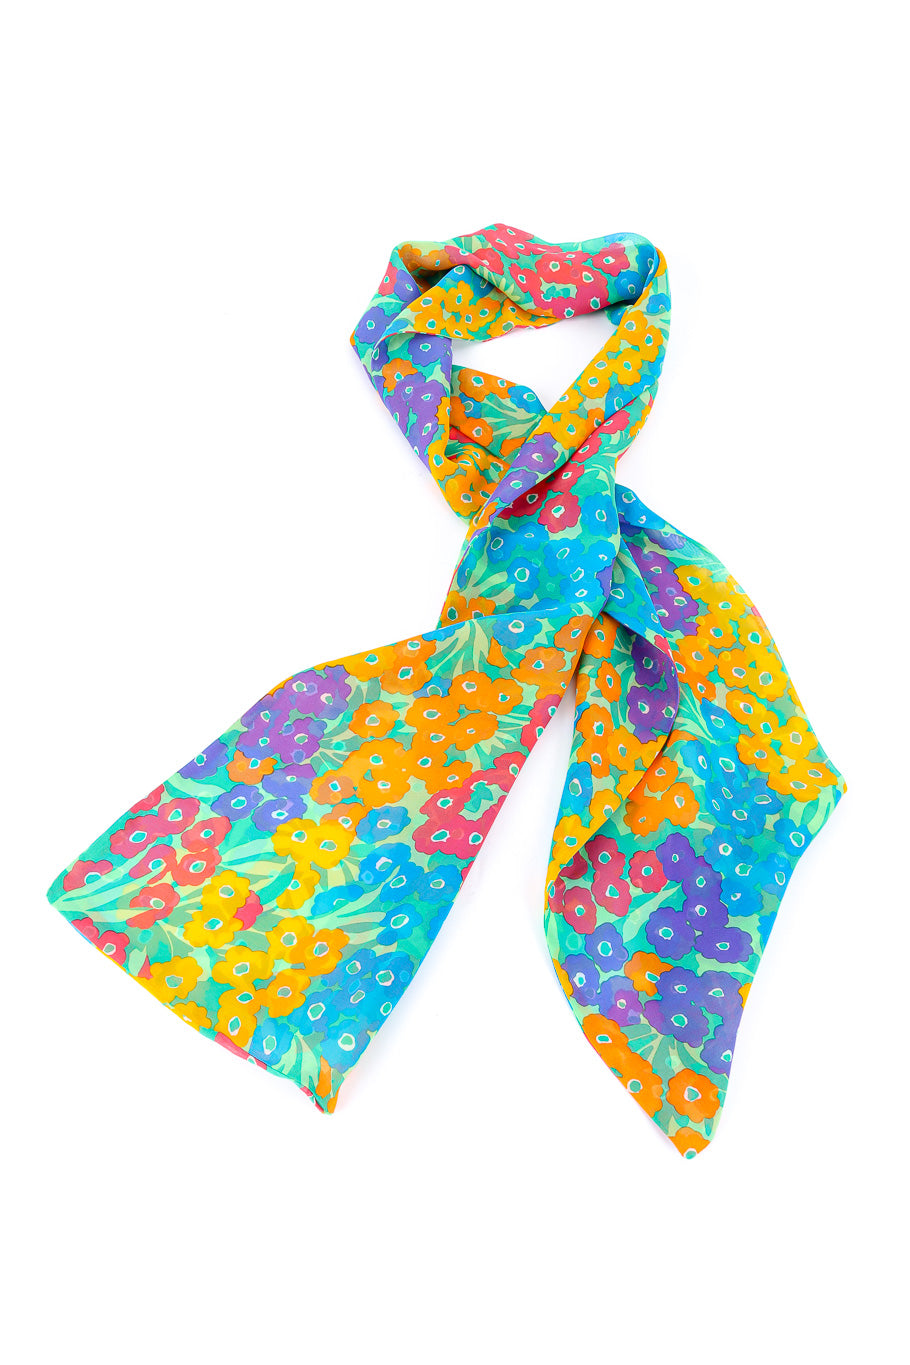 Silk blouse and scarf by Ognibene Zendman flat lay scarf  @recessla